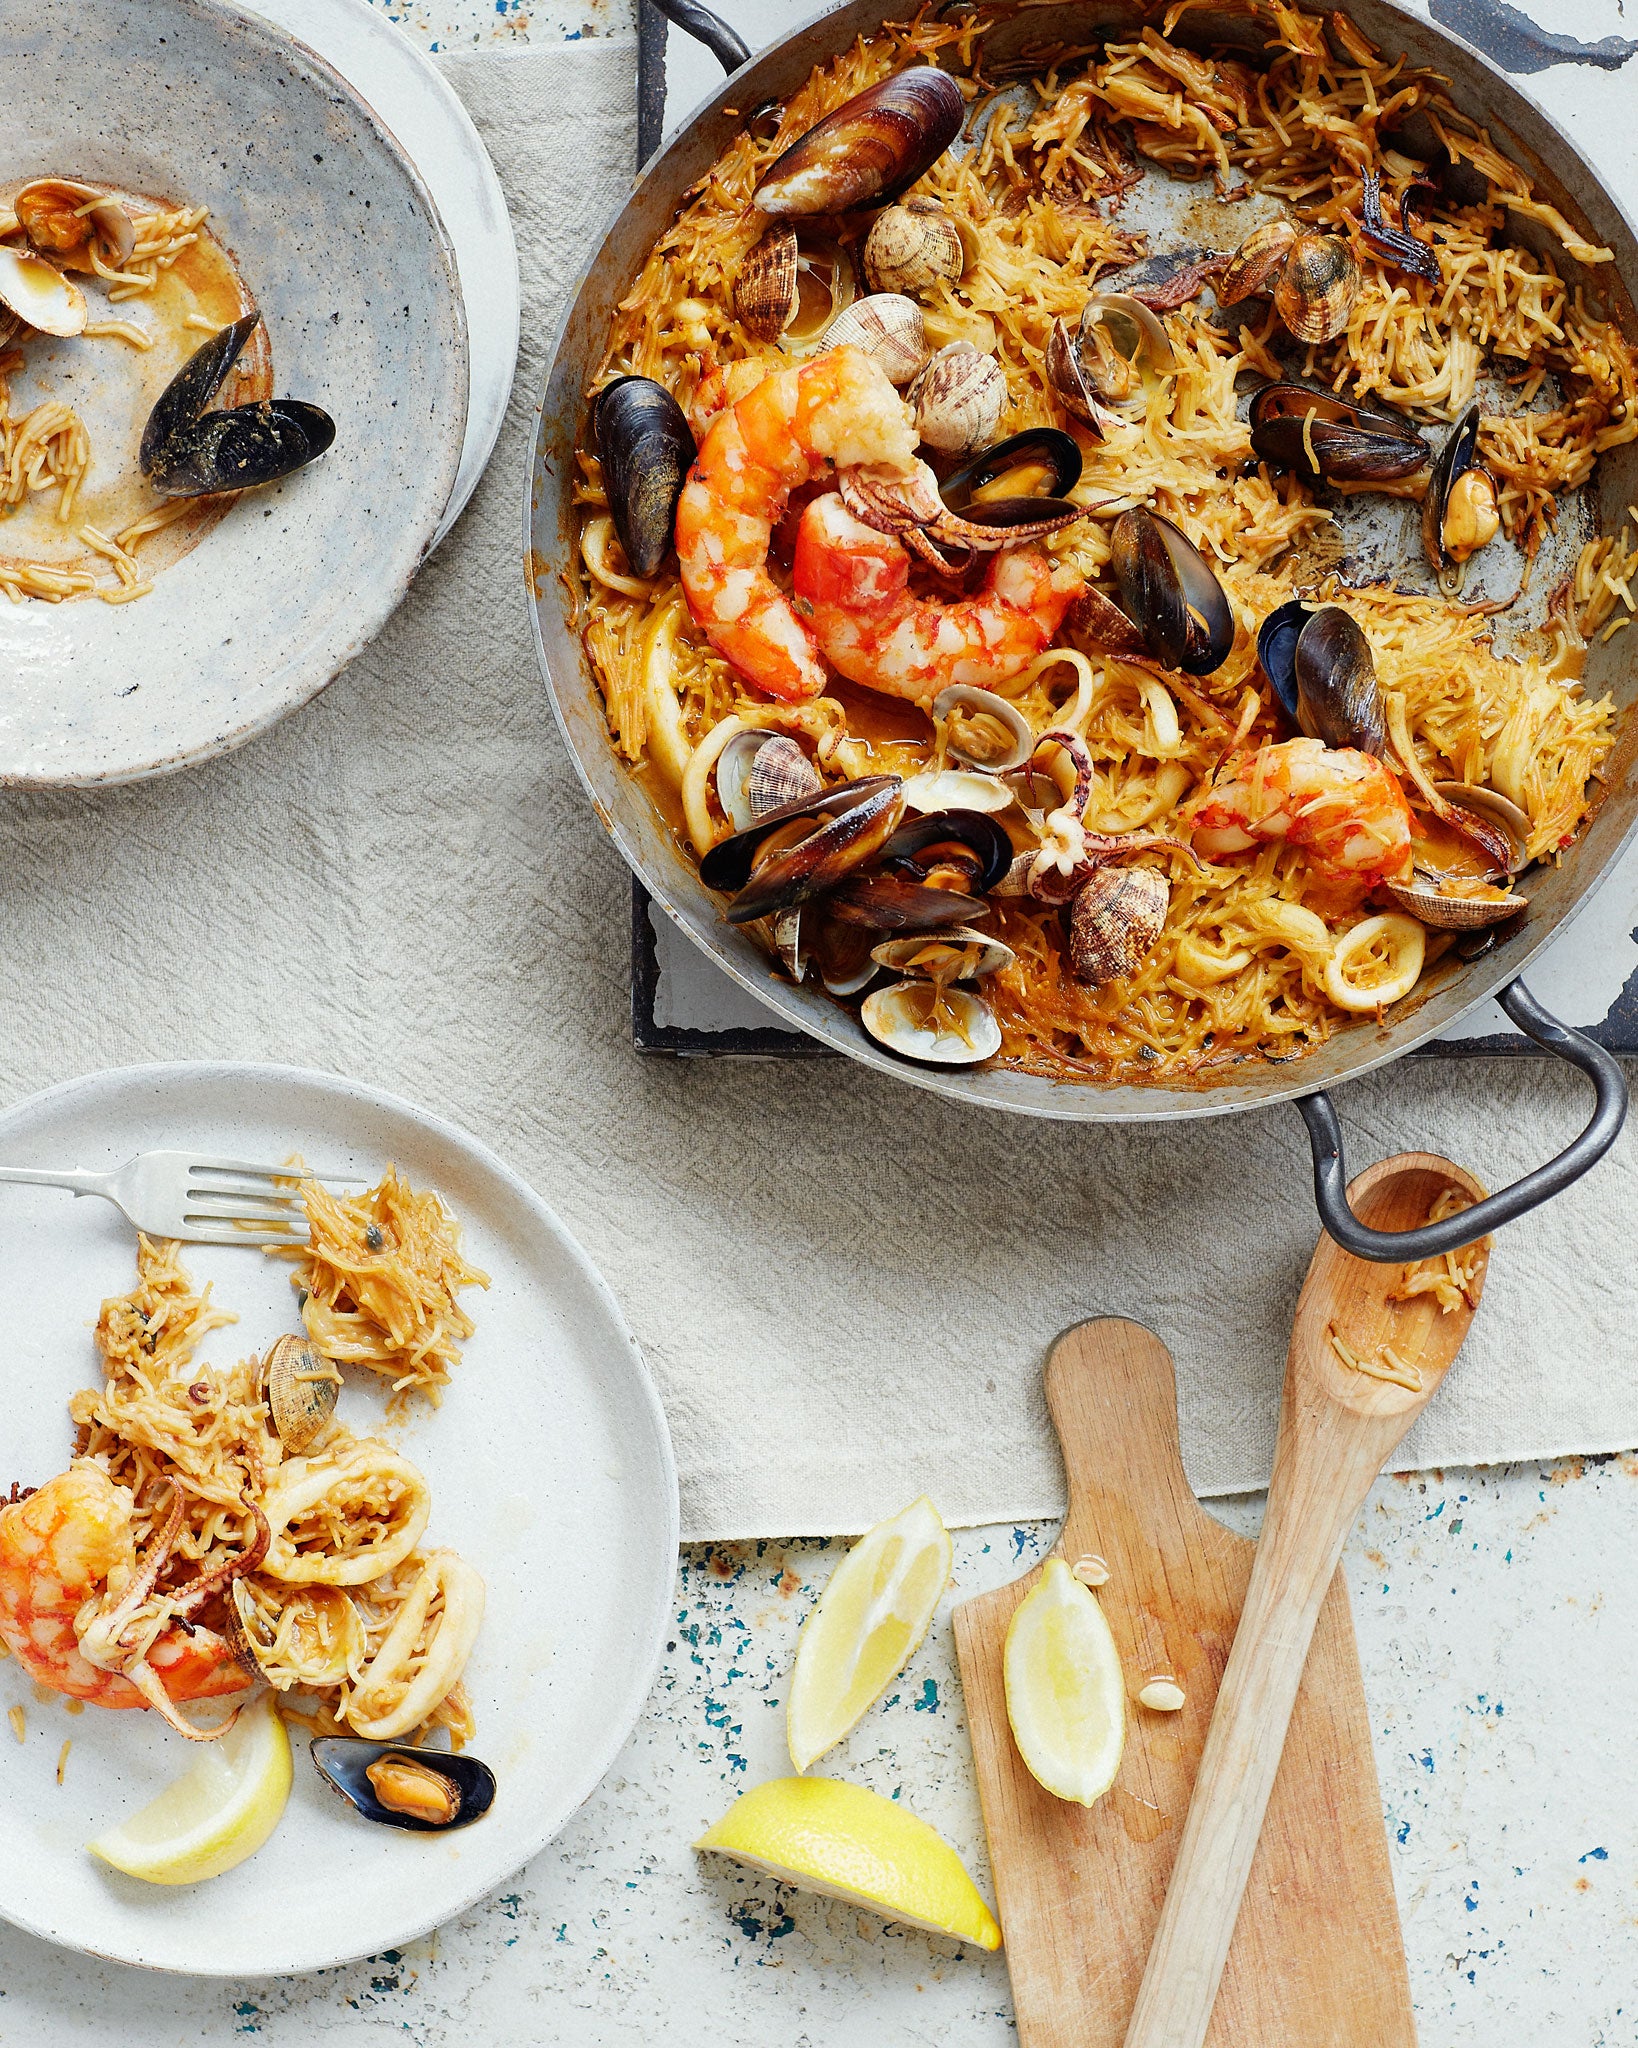 If you like paella, you'll love Catalan dish fideua